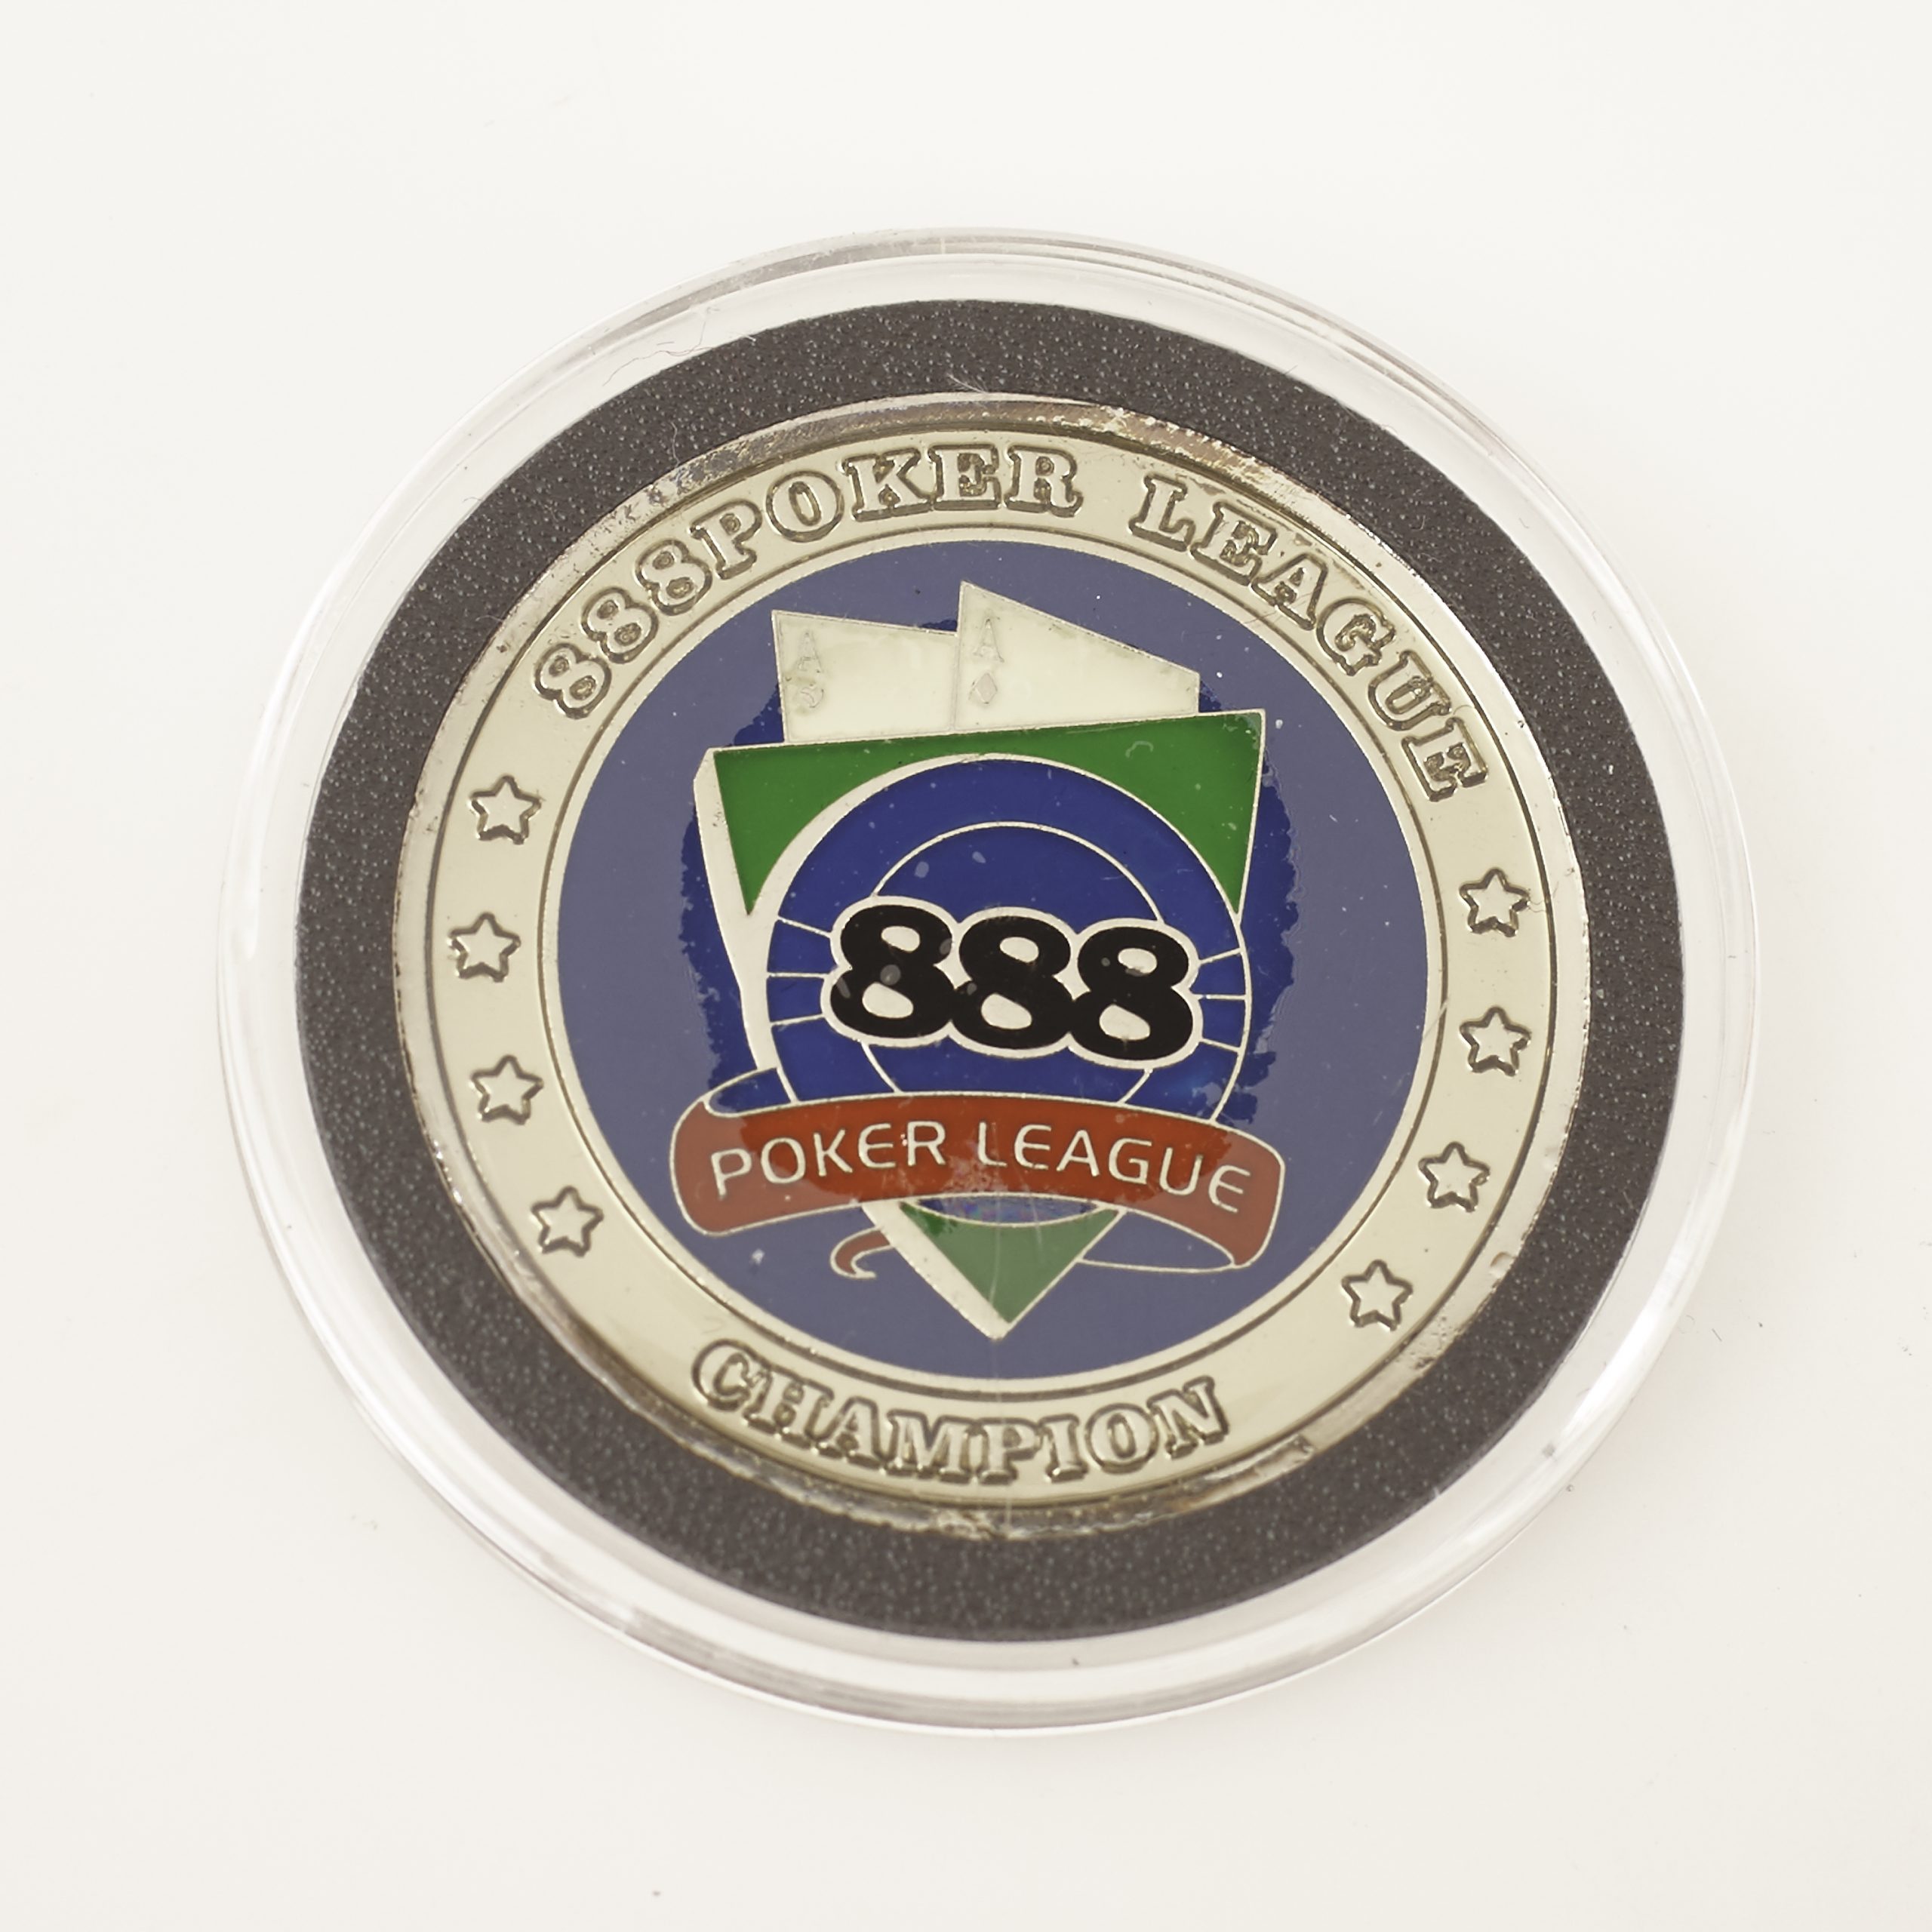 888 POKER LEAGUE, CHAMPION, (SILVER Circular Rim) Poker Card Guard